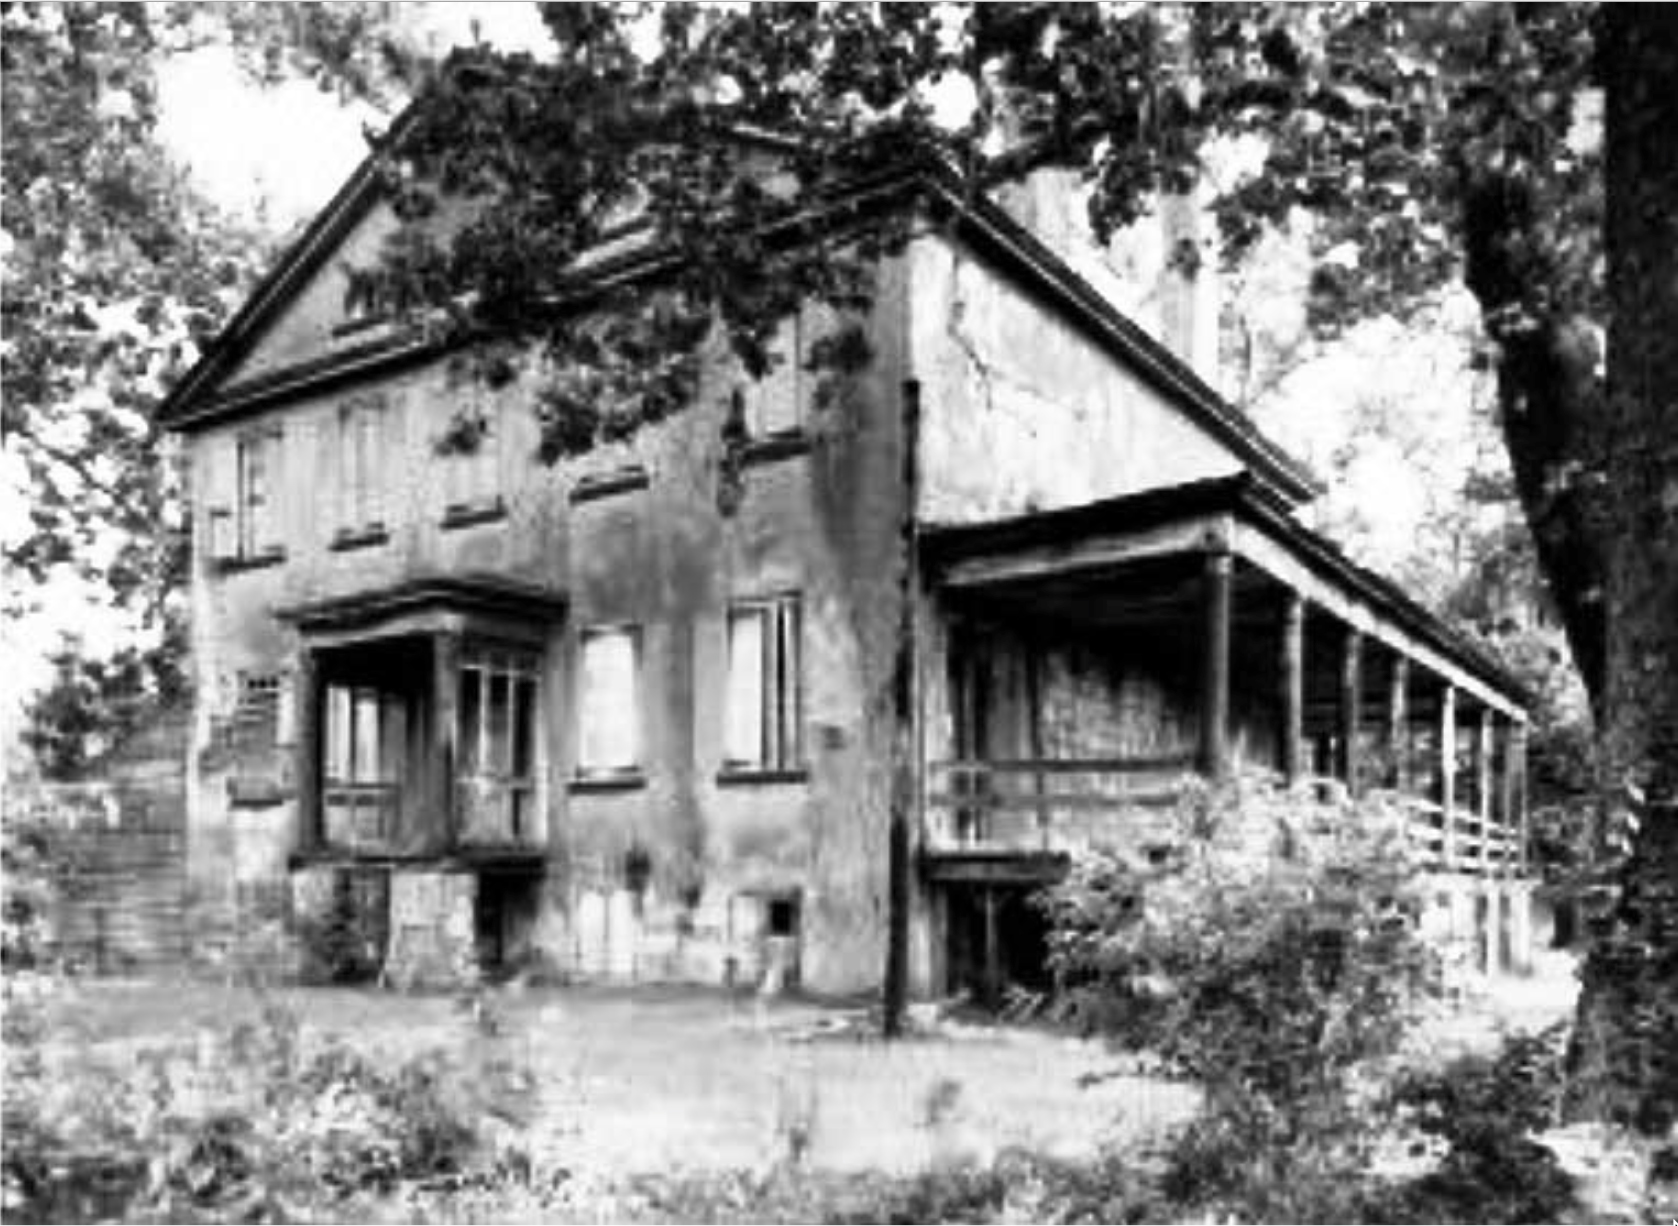 Atsion Mansion around the turn of the 20th century